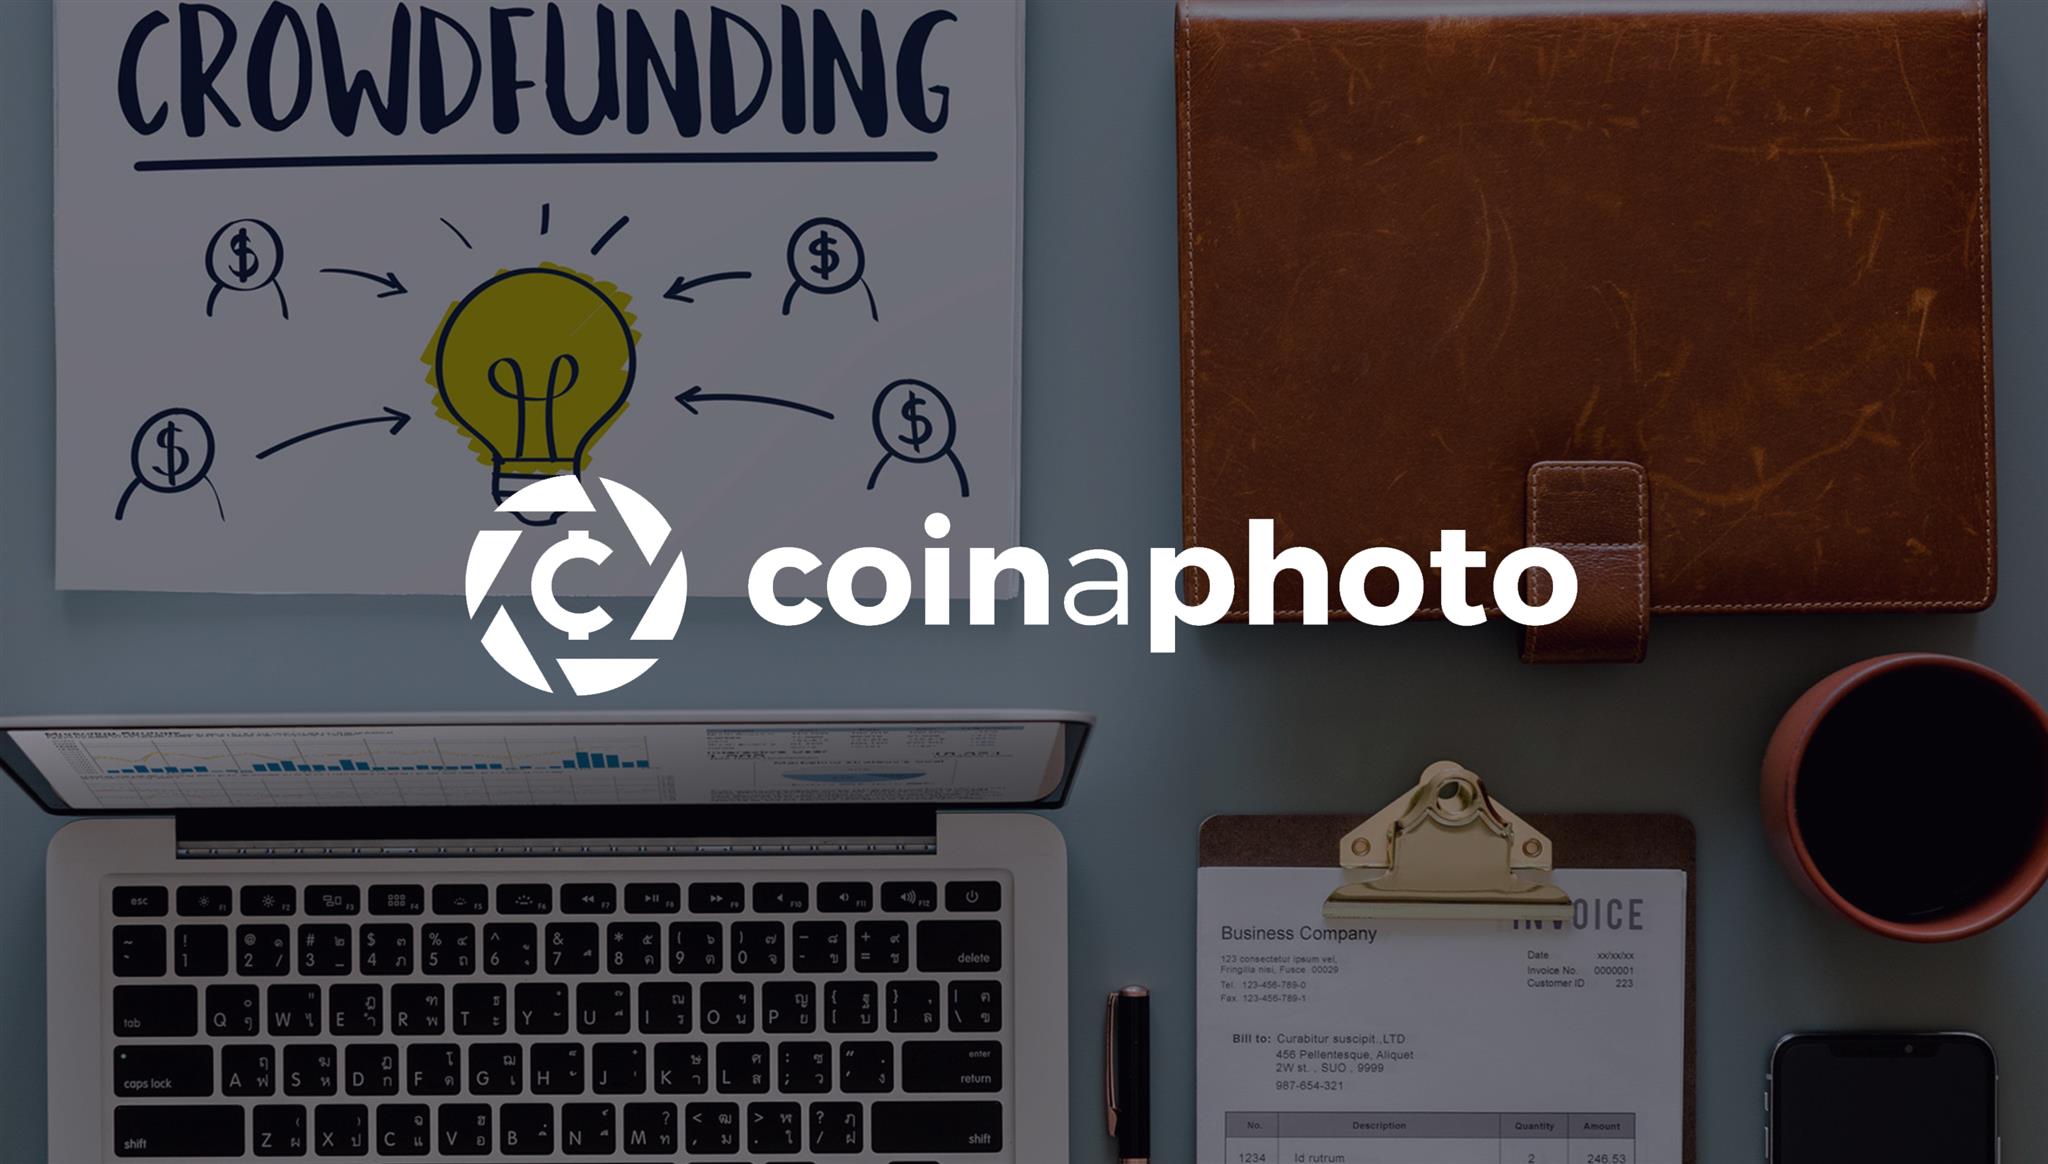 coinaphoto crowdfunding campaign